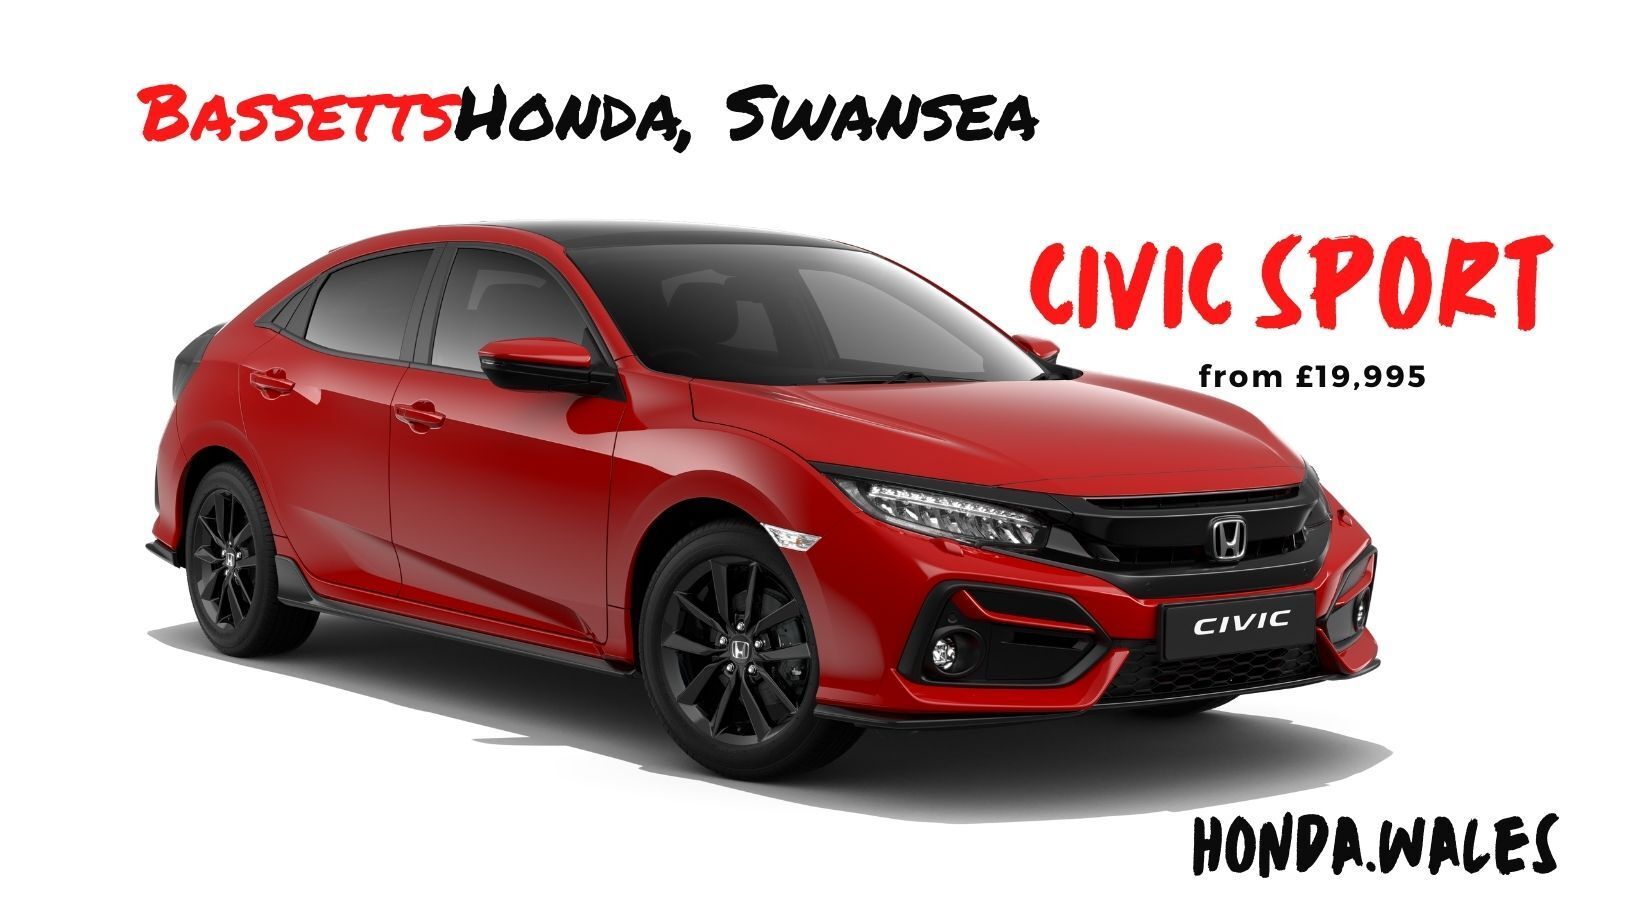 Civic Sport Offer £19,995